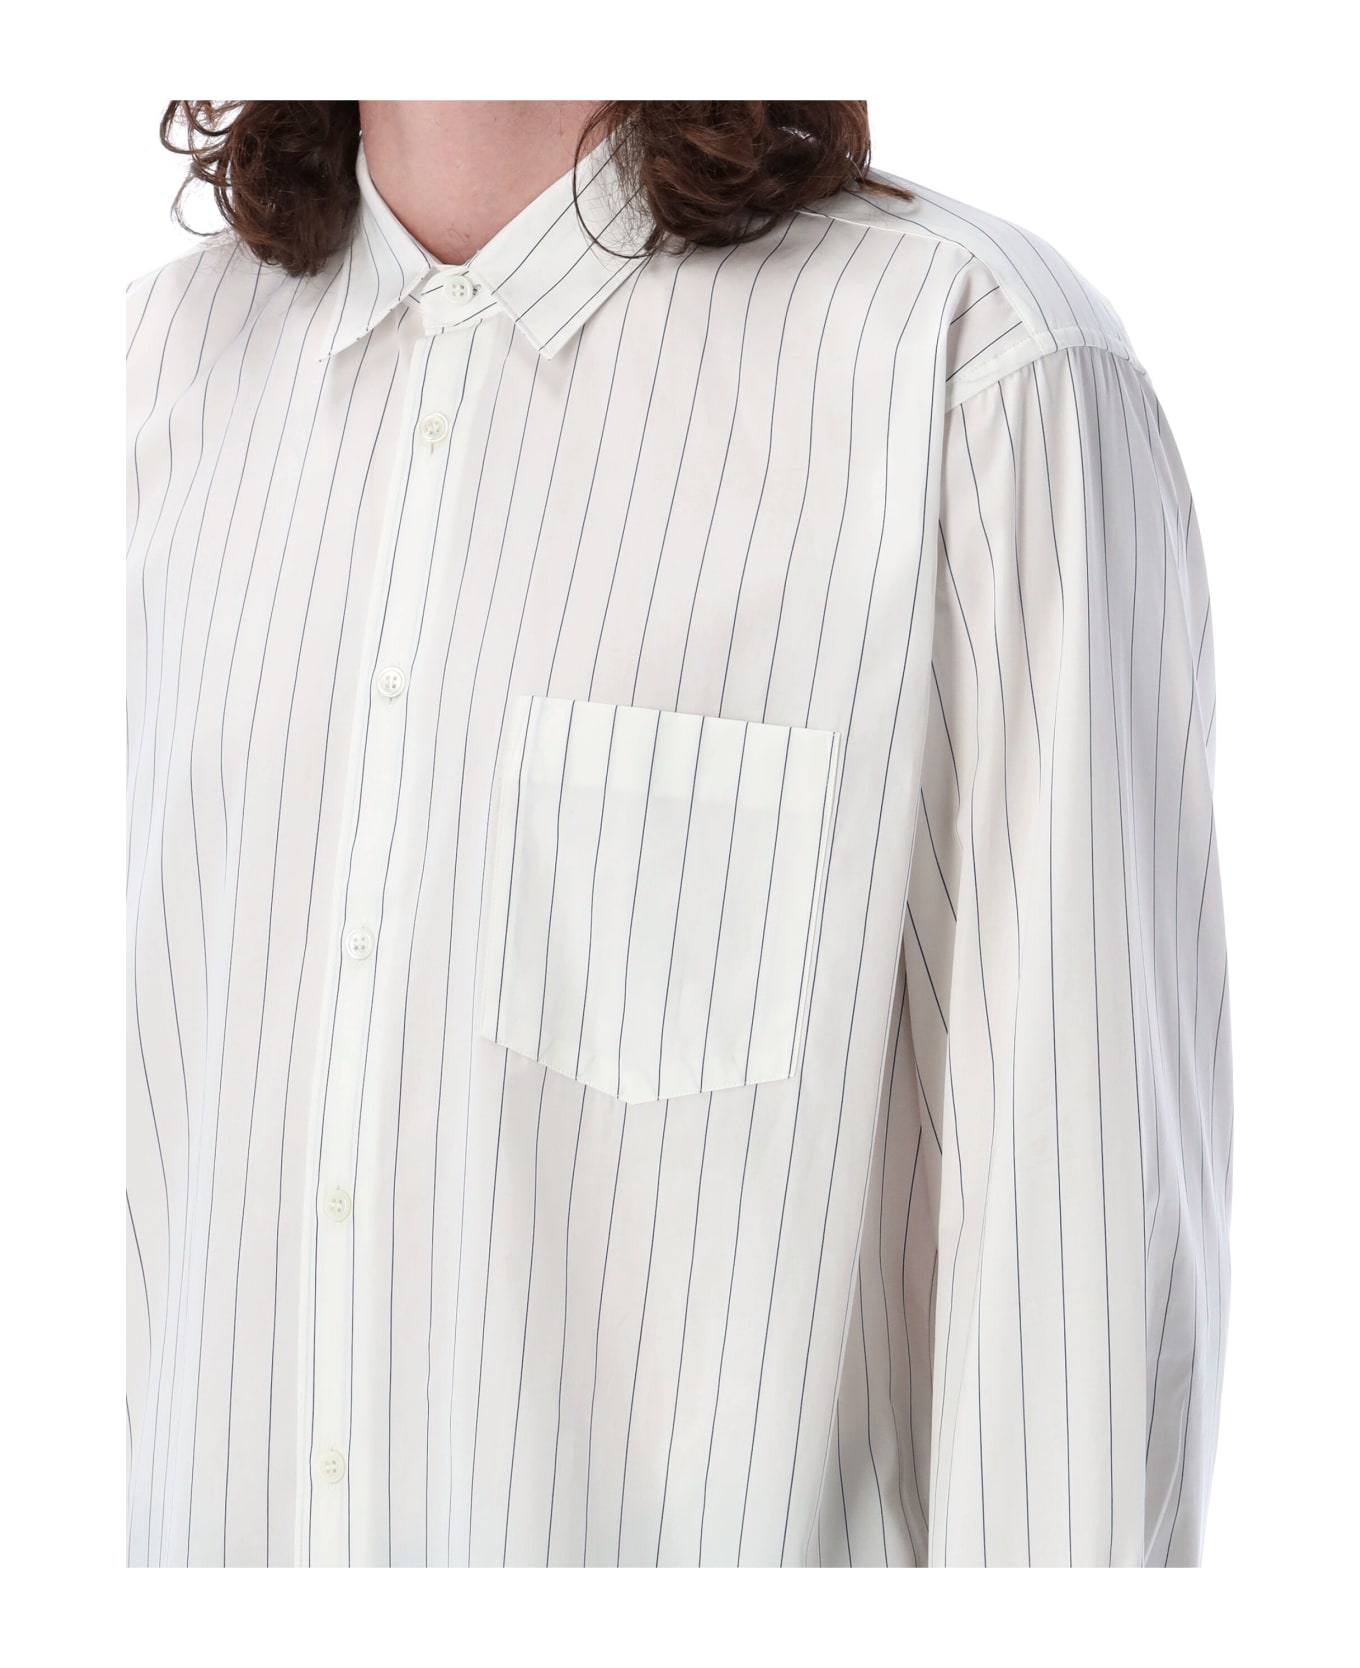 Comme des Garçons Shirt Striped Shirt - WHITE NAVY シャツ